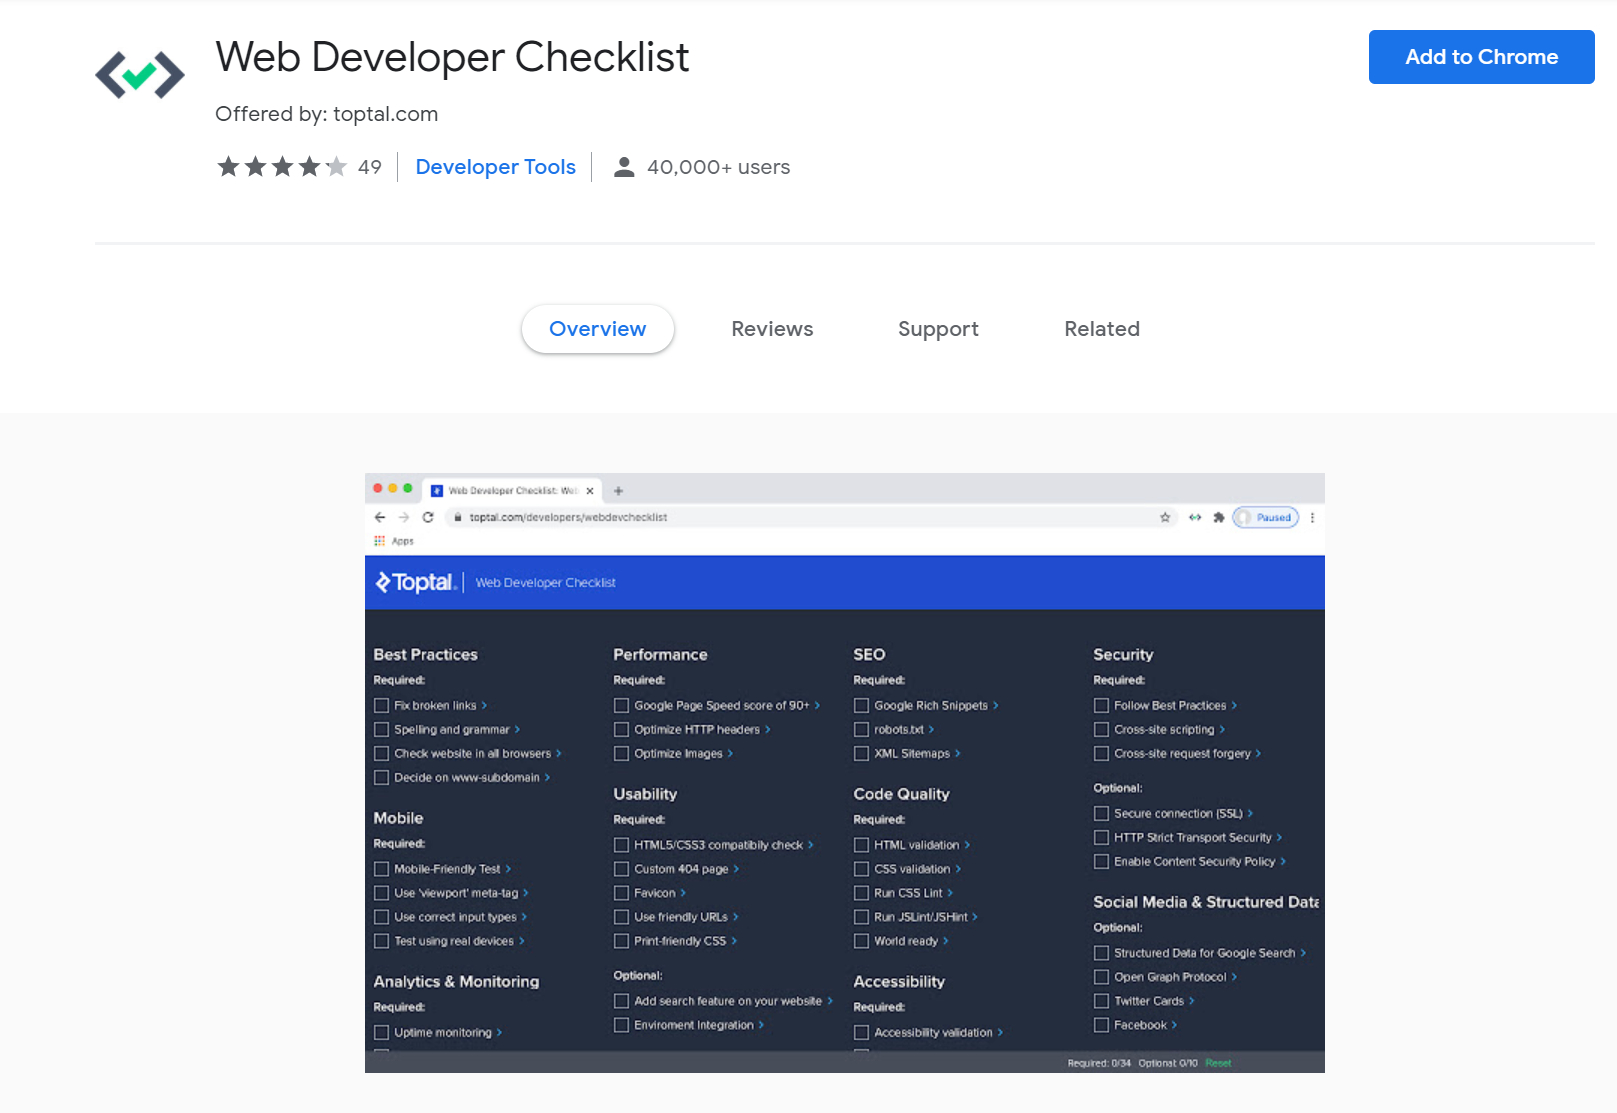 Web developer checklist